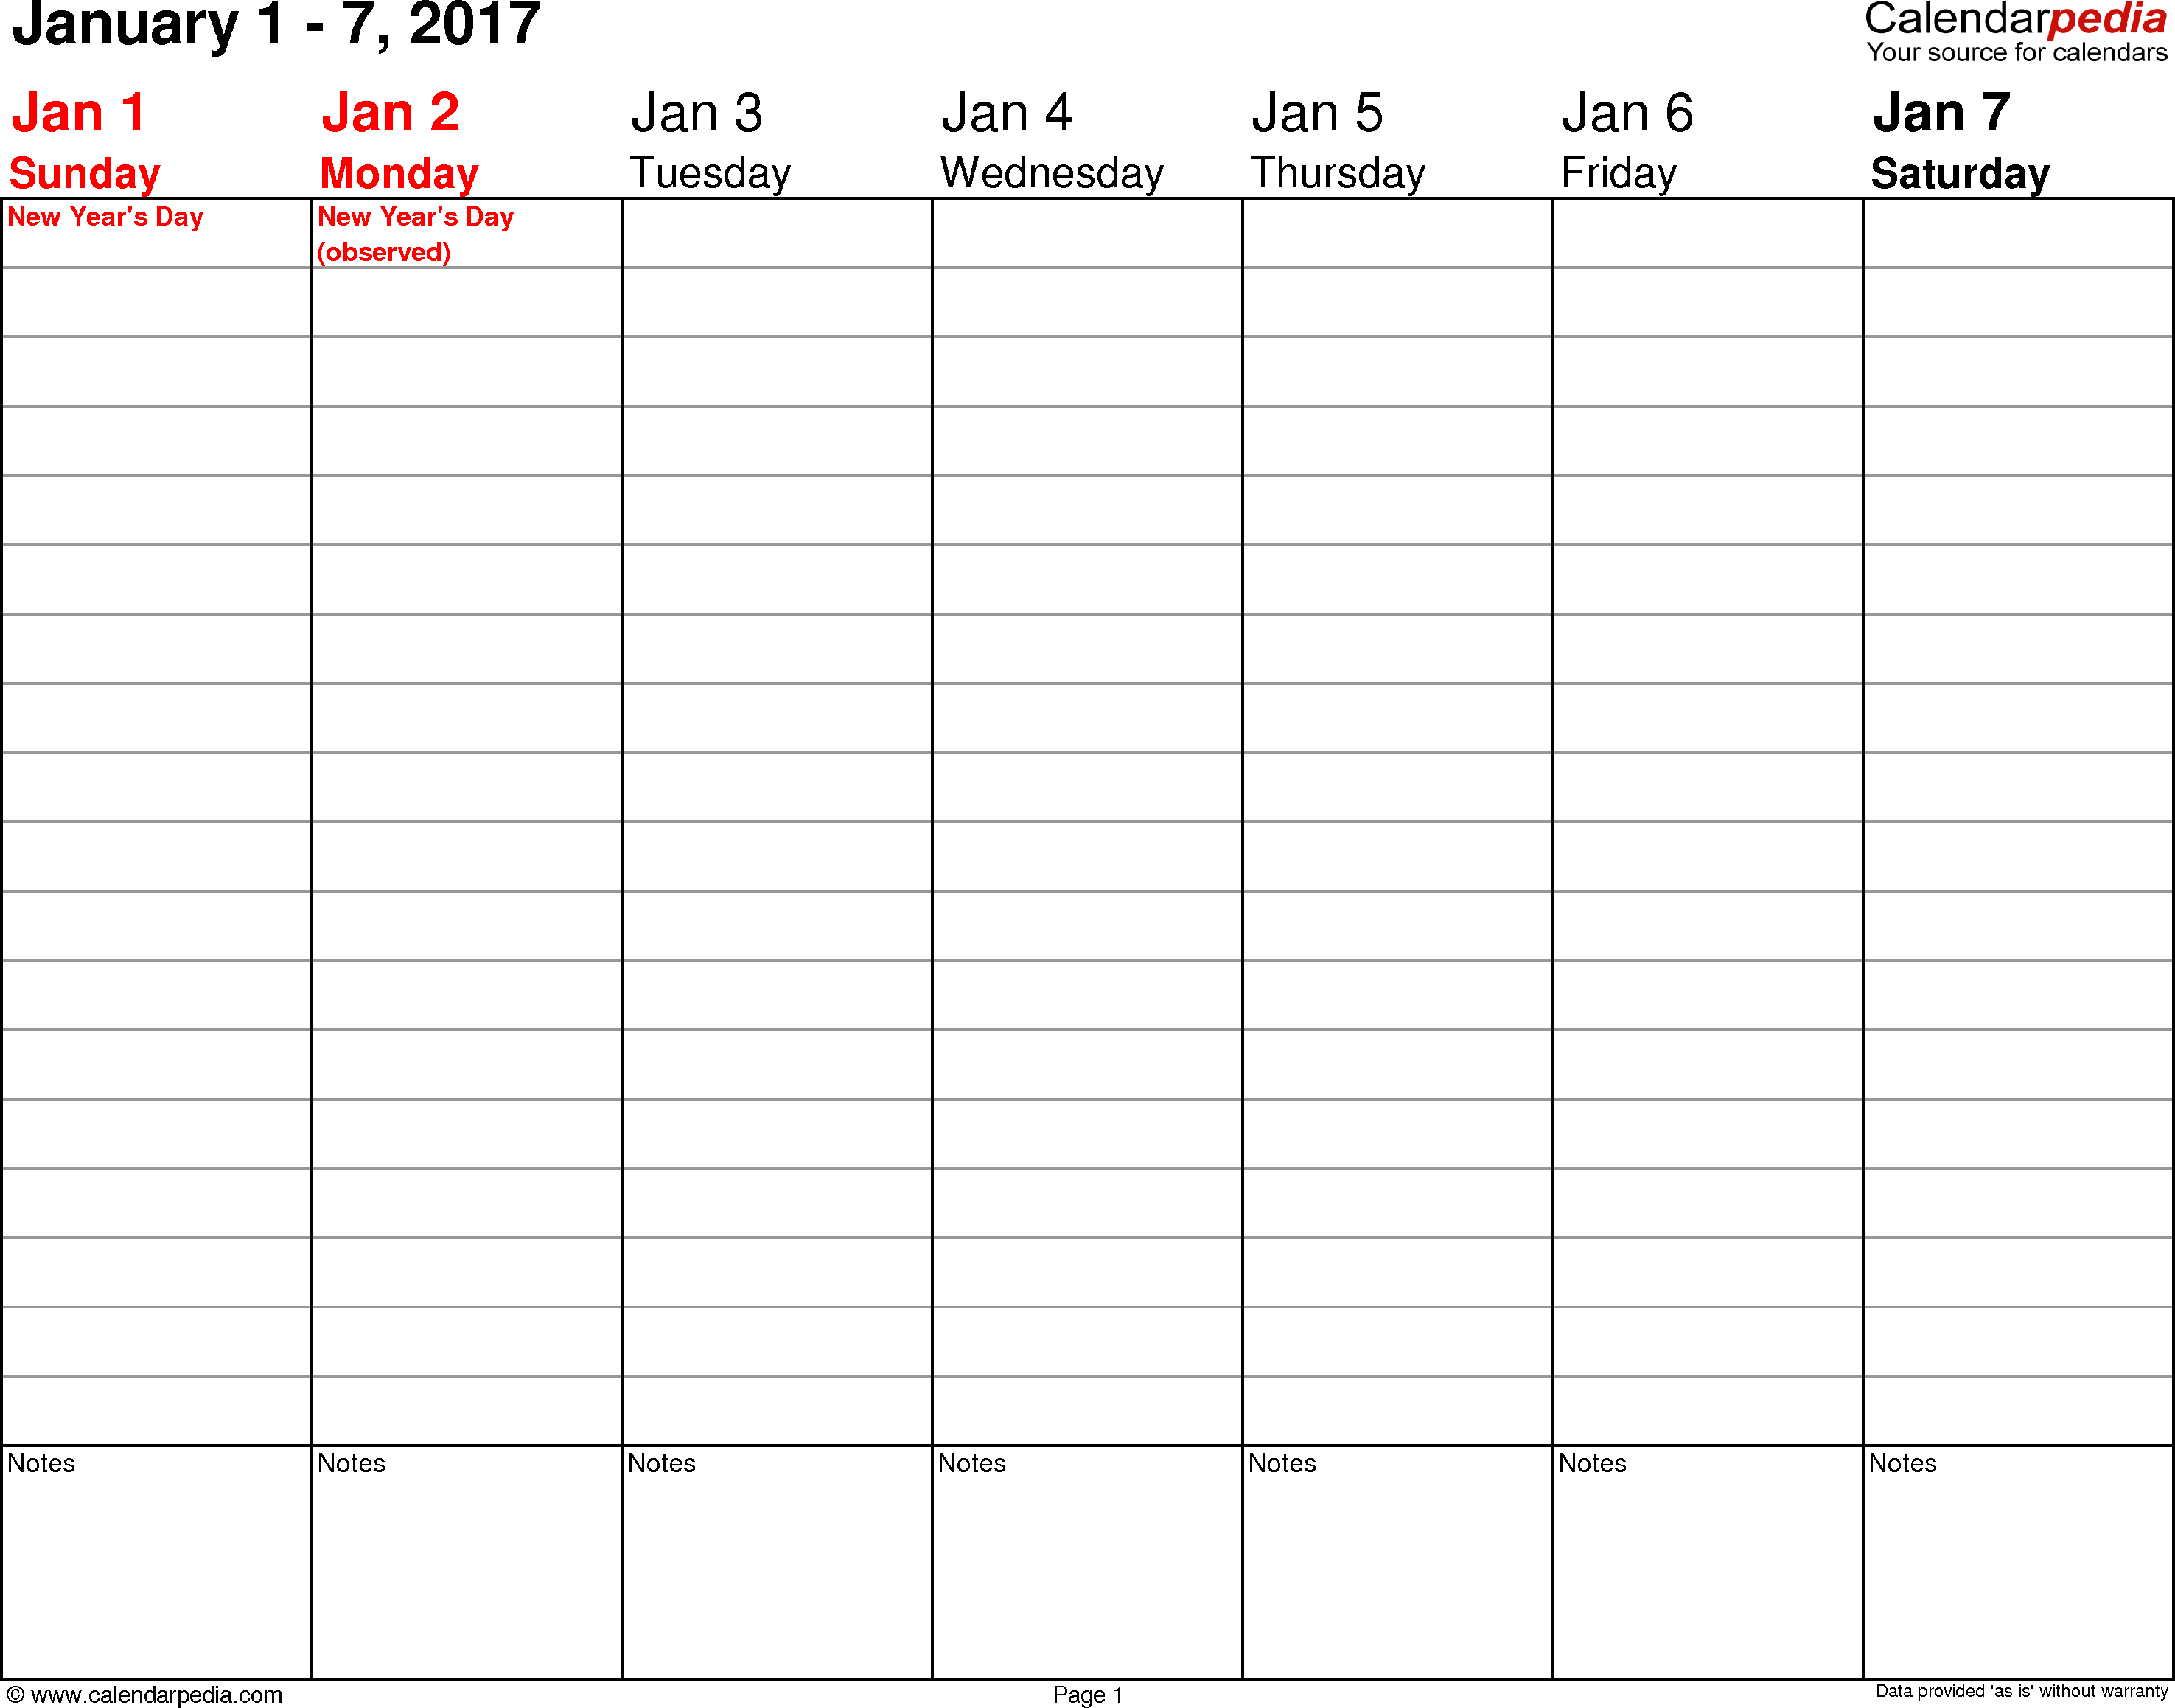 Weekly Calendar 2017 For Word - 12 Free Printable Templates - Free Printable Weekly Planner 2017